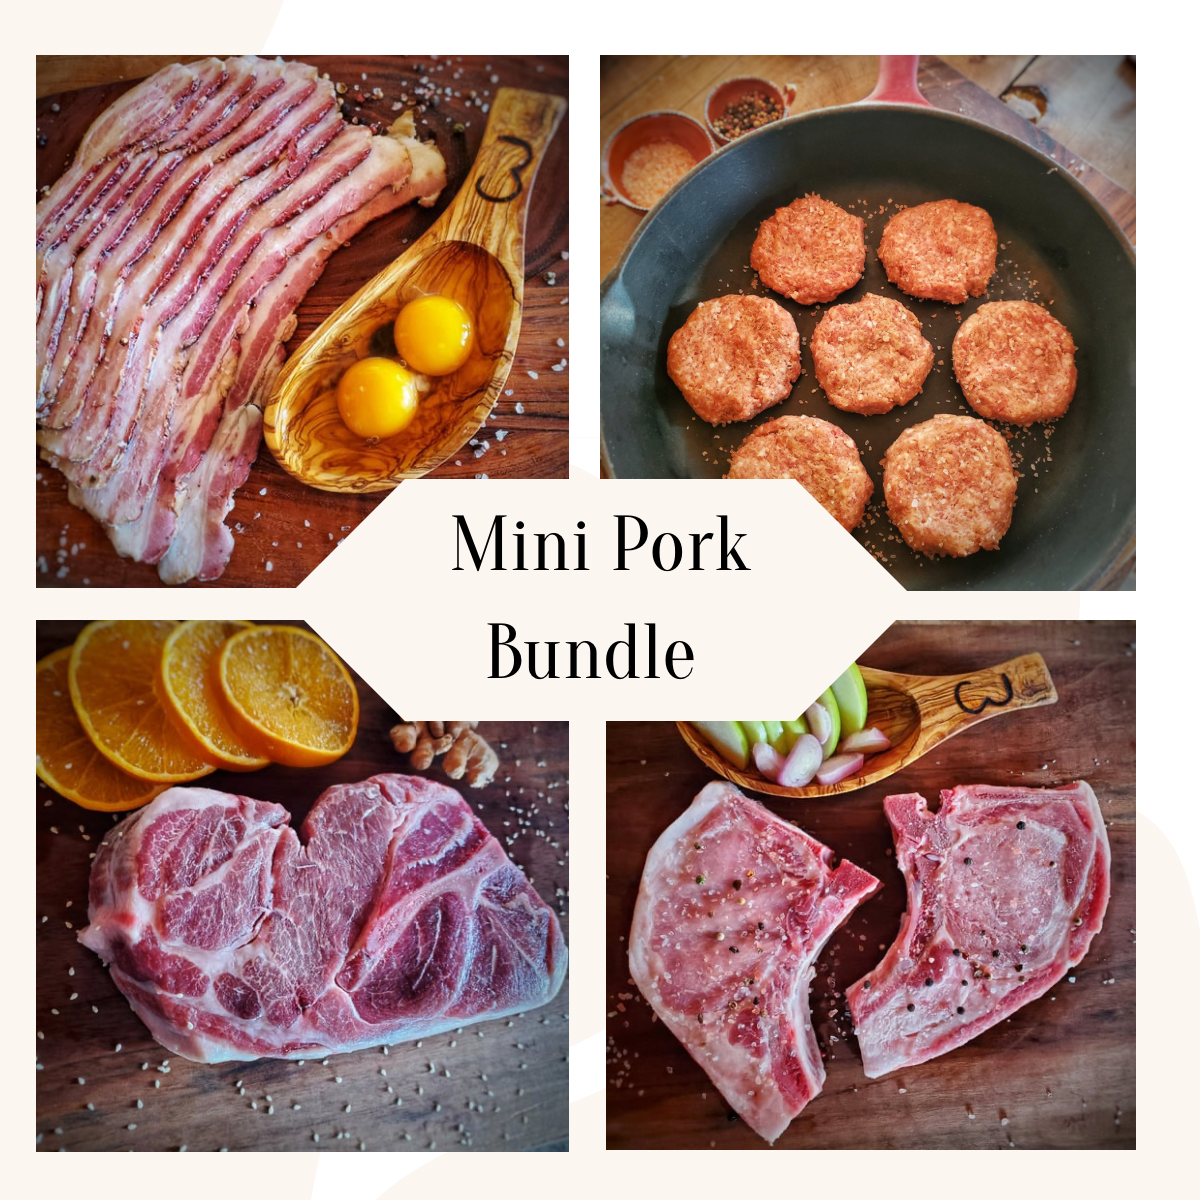 Mini Pork DEPOSIT